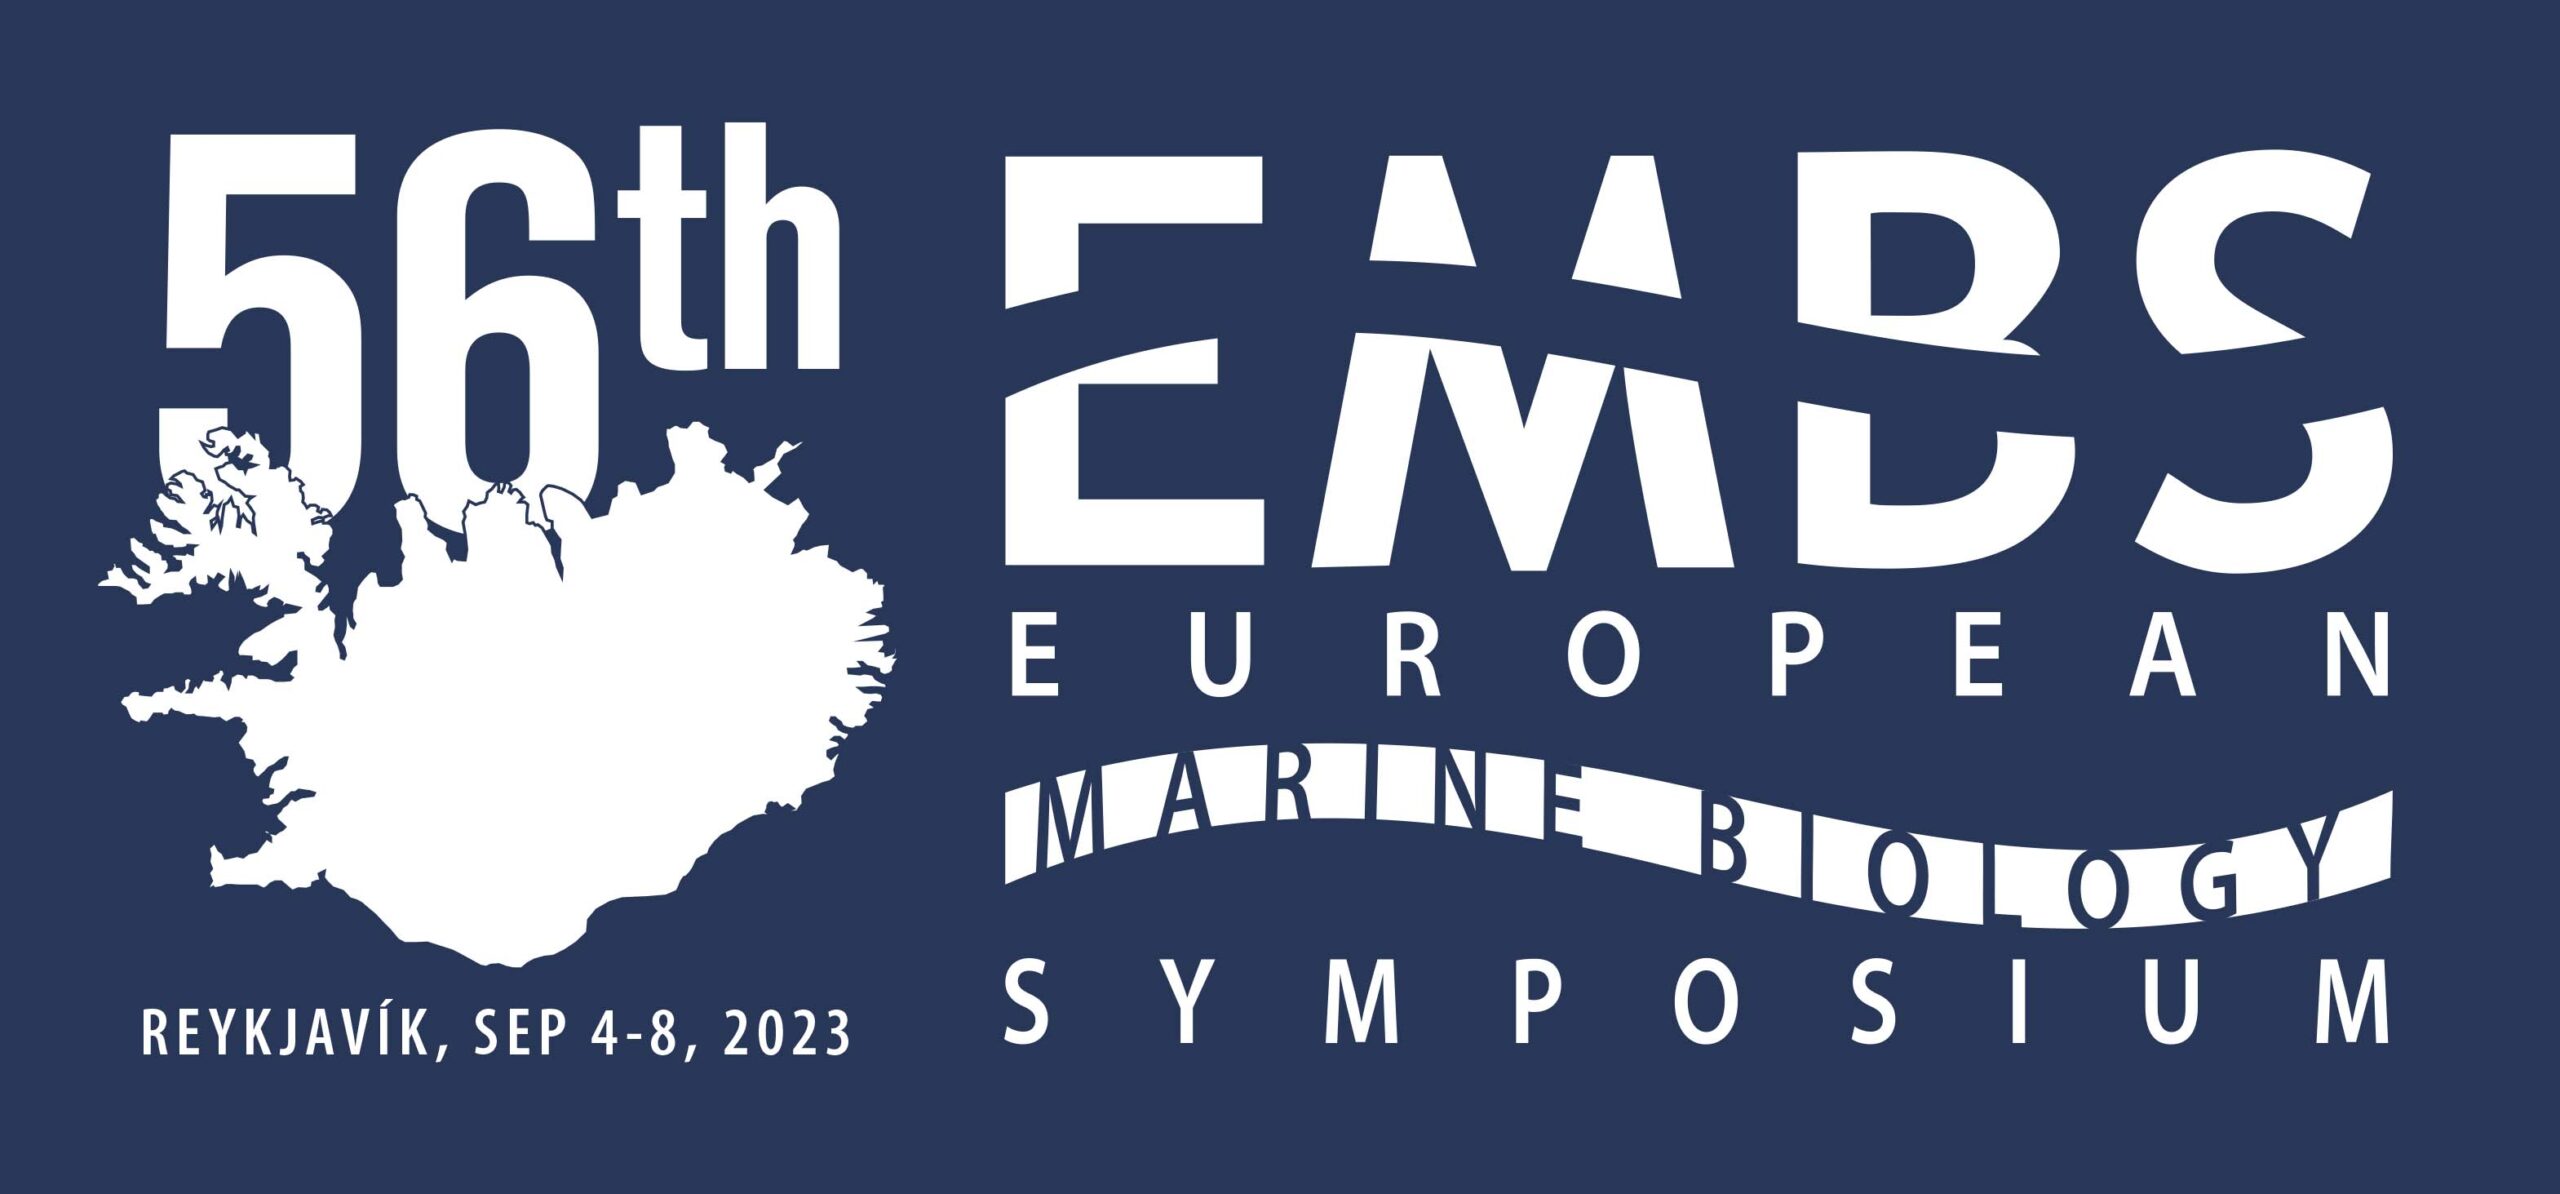 56th European Marine Biology Symposium